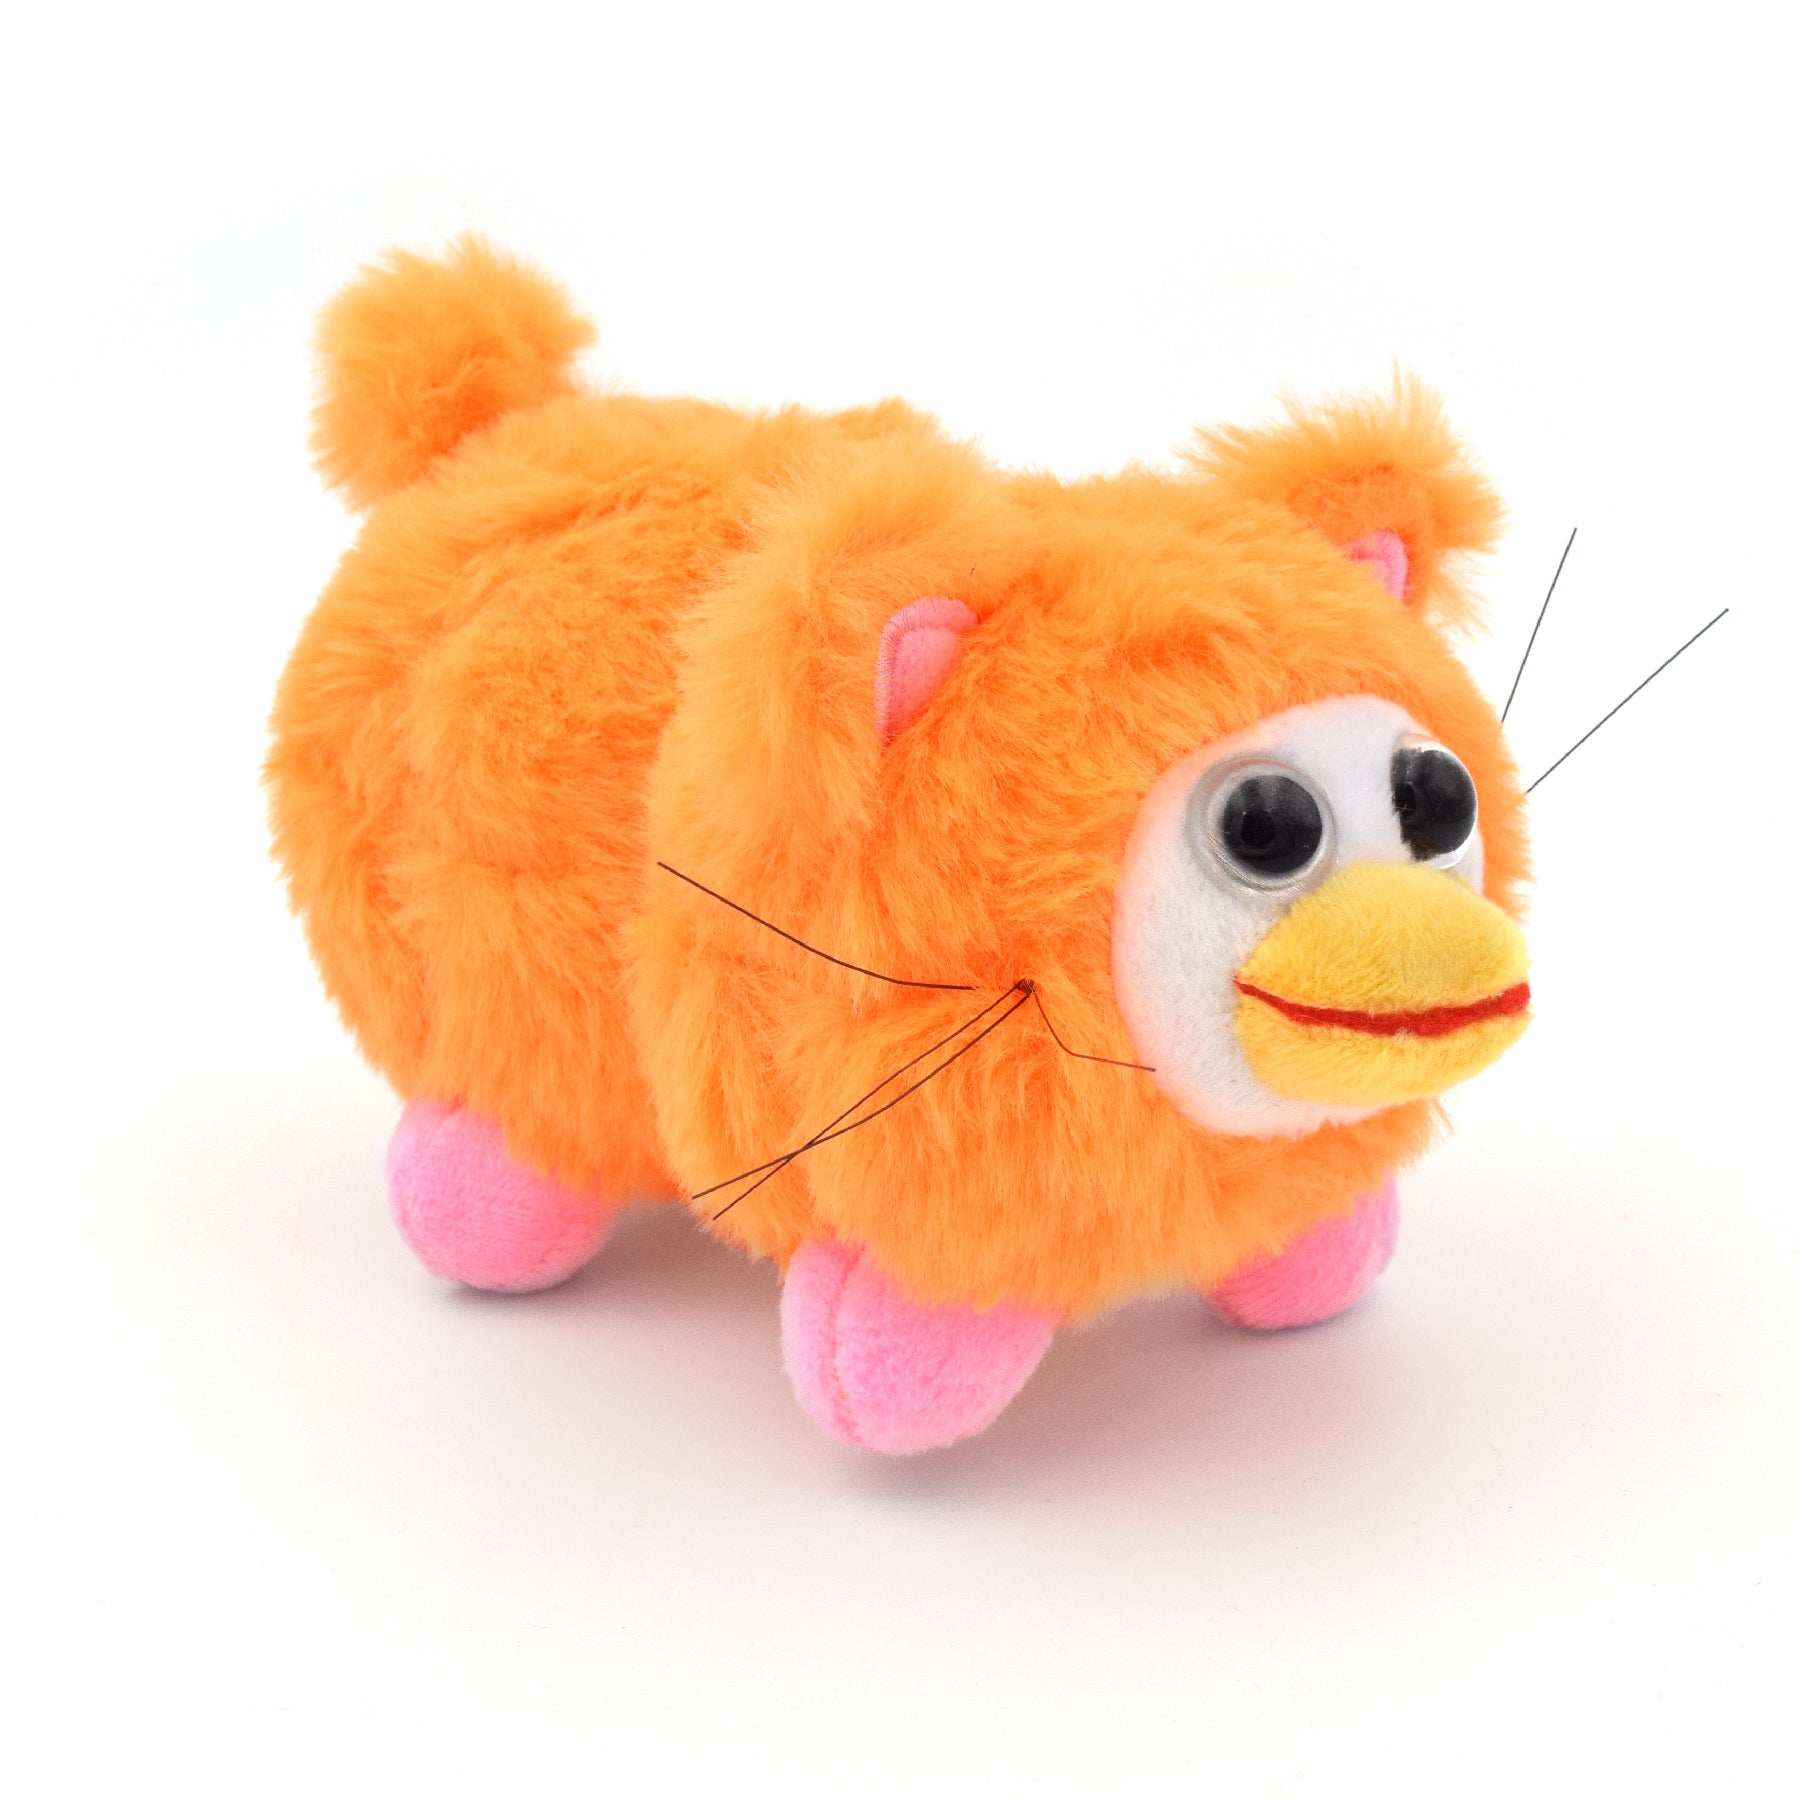 Orange Fuzzy Peepy (Tigerpy)